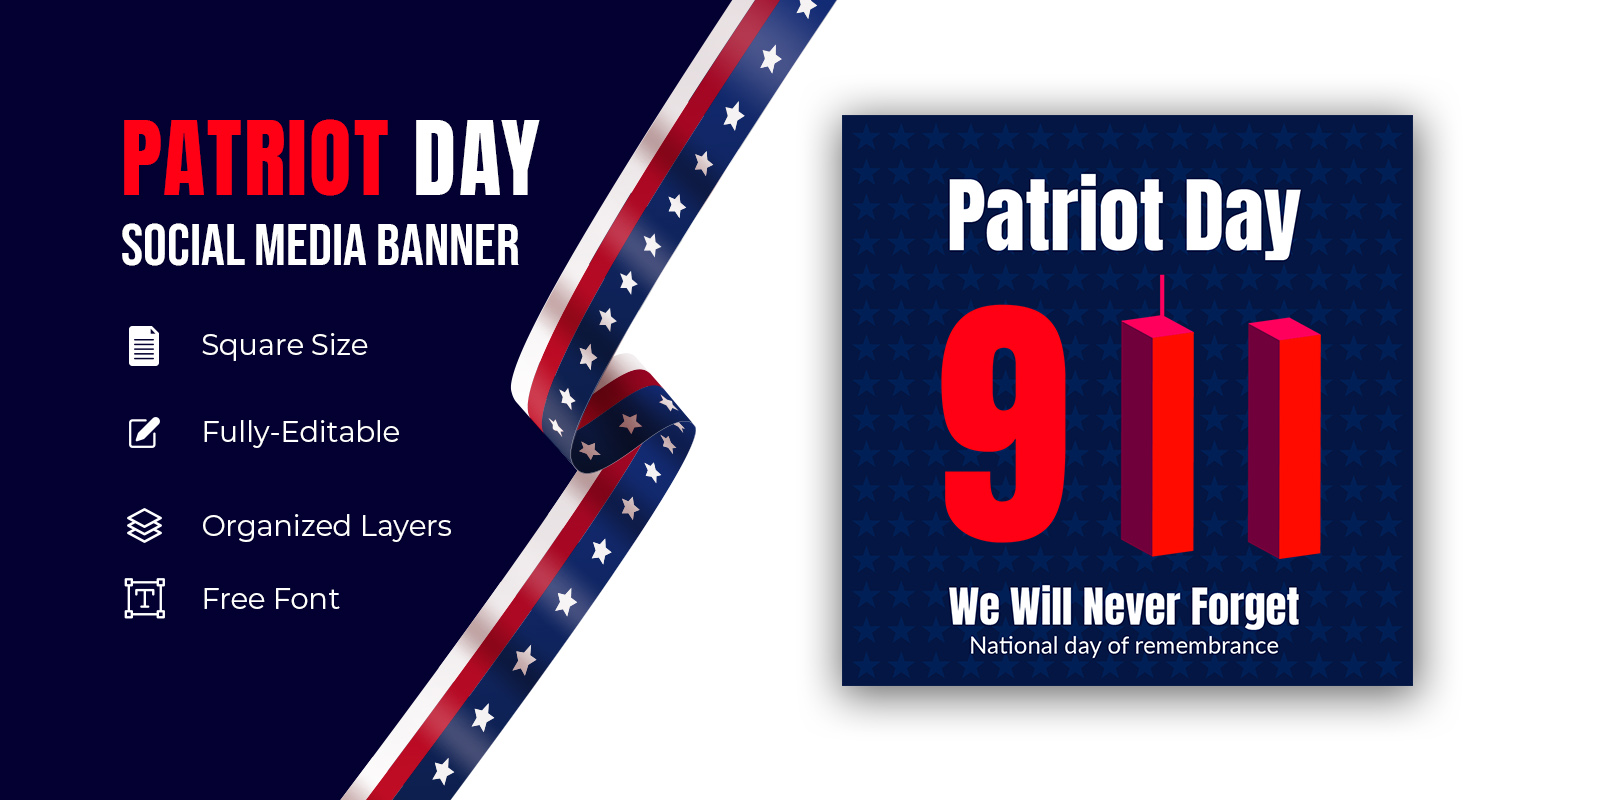 Patriot Day September 11, 2001 Banner We Will Never Forget 9/11 Social Media